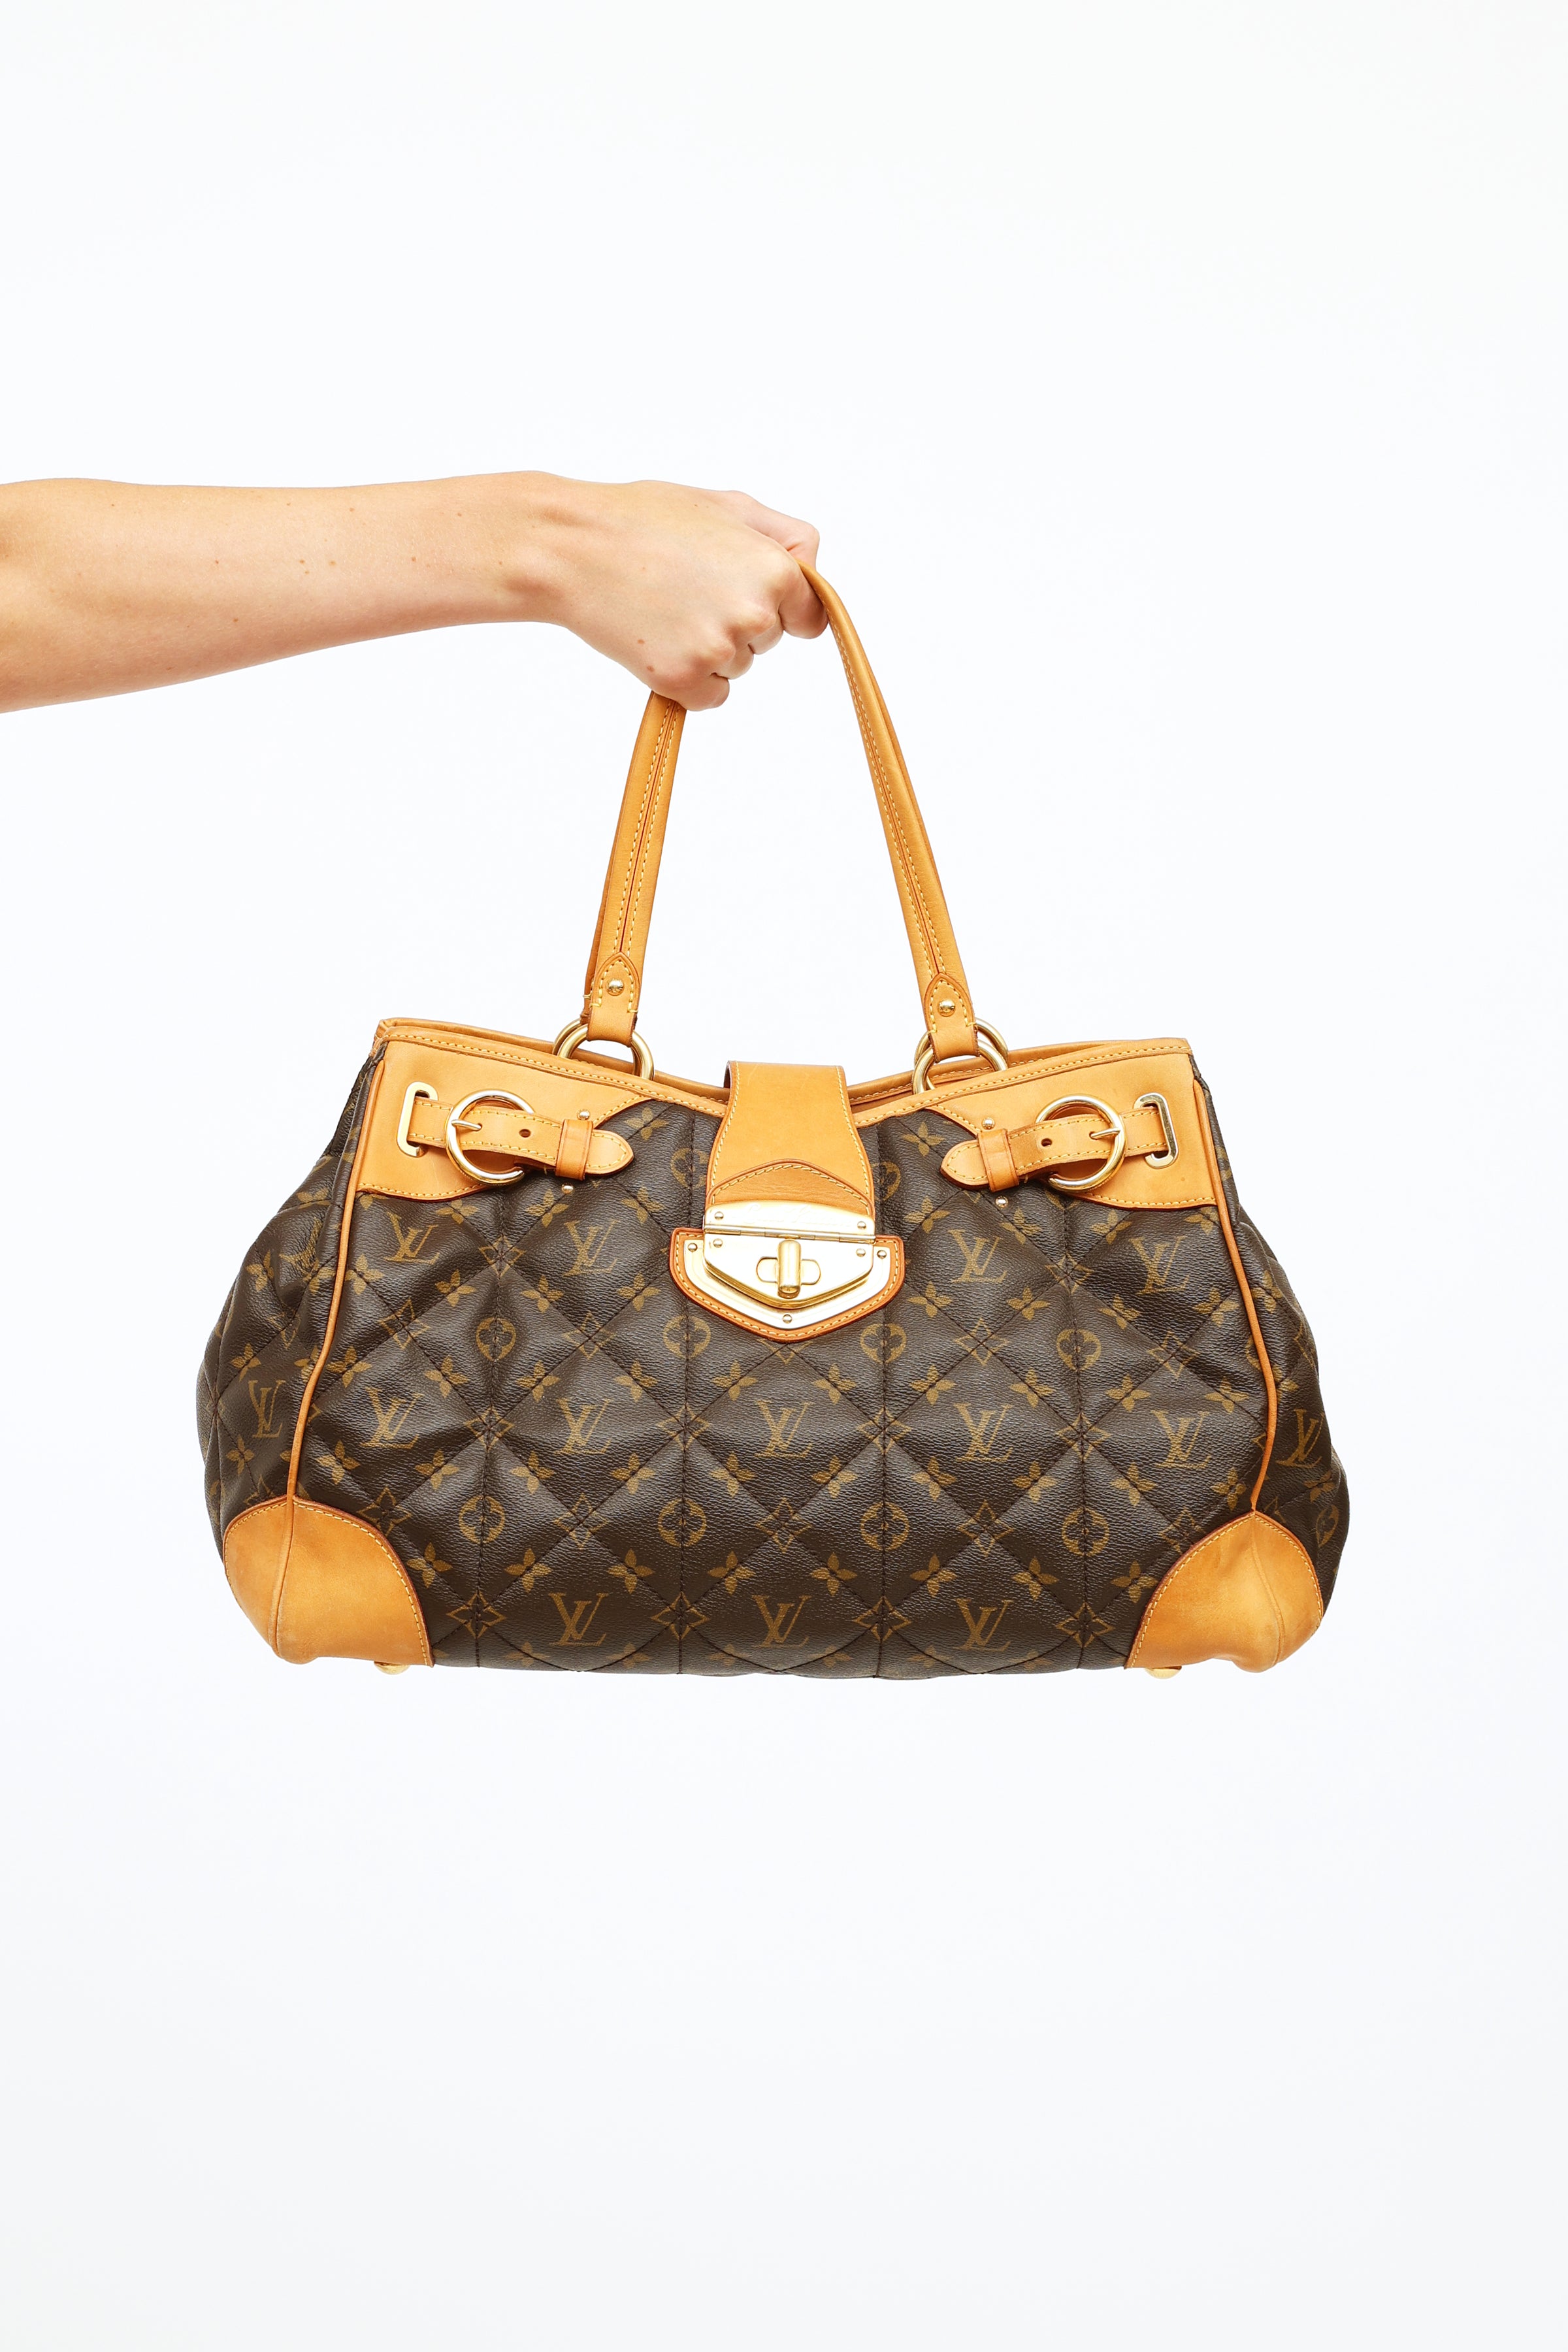 Authentic Louis Vuitton lockme Shopper Handbag  eBay